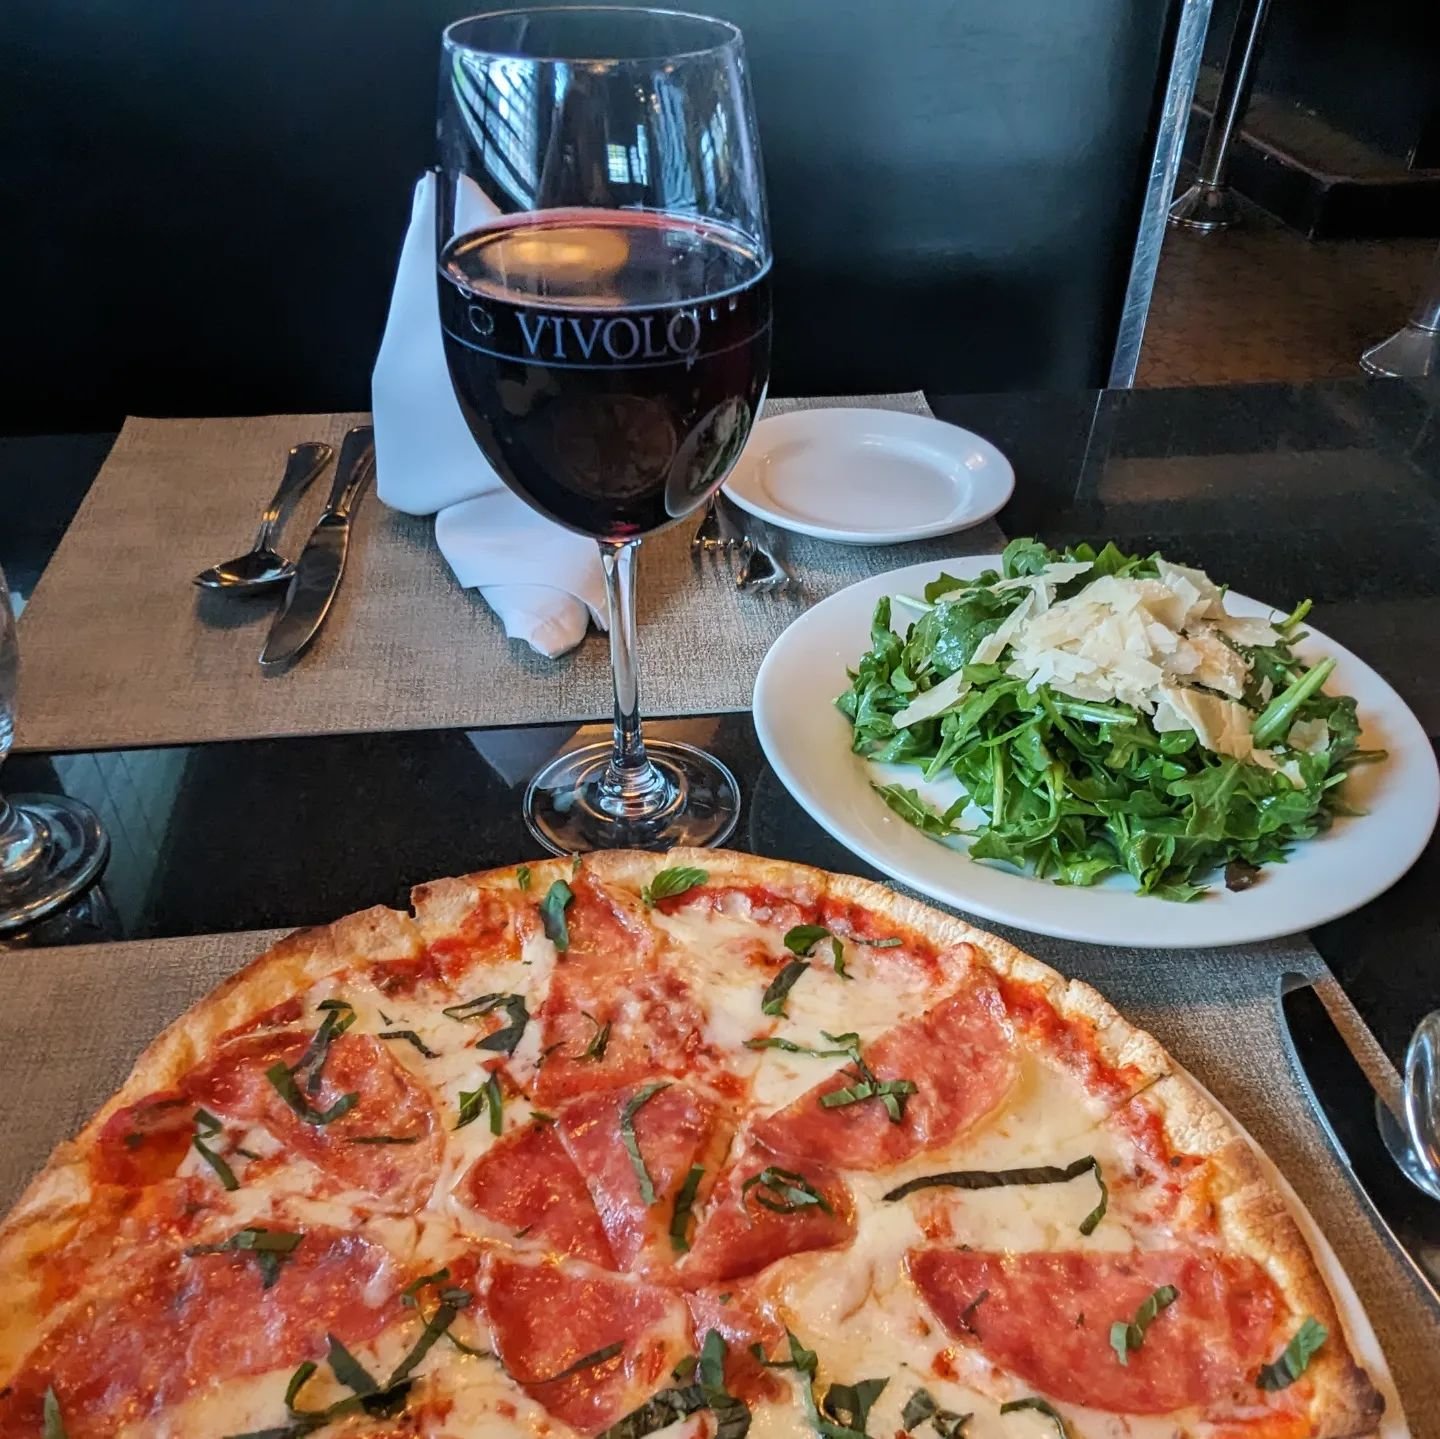 Midday munchies mastered! 🍕
Pizza with Genova salami, fresh basil, tomato &amp; mozzarella.

☎️ (914) 835-6199 for take-out &amp; reservations.
📍Harrison, NY

#trattoriavivolo #cucinaitaliana #vivolo #harrison #pizza #genovese #salami #westchestere